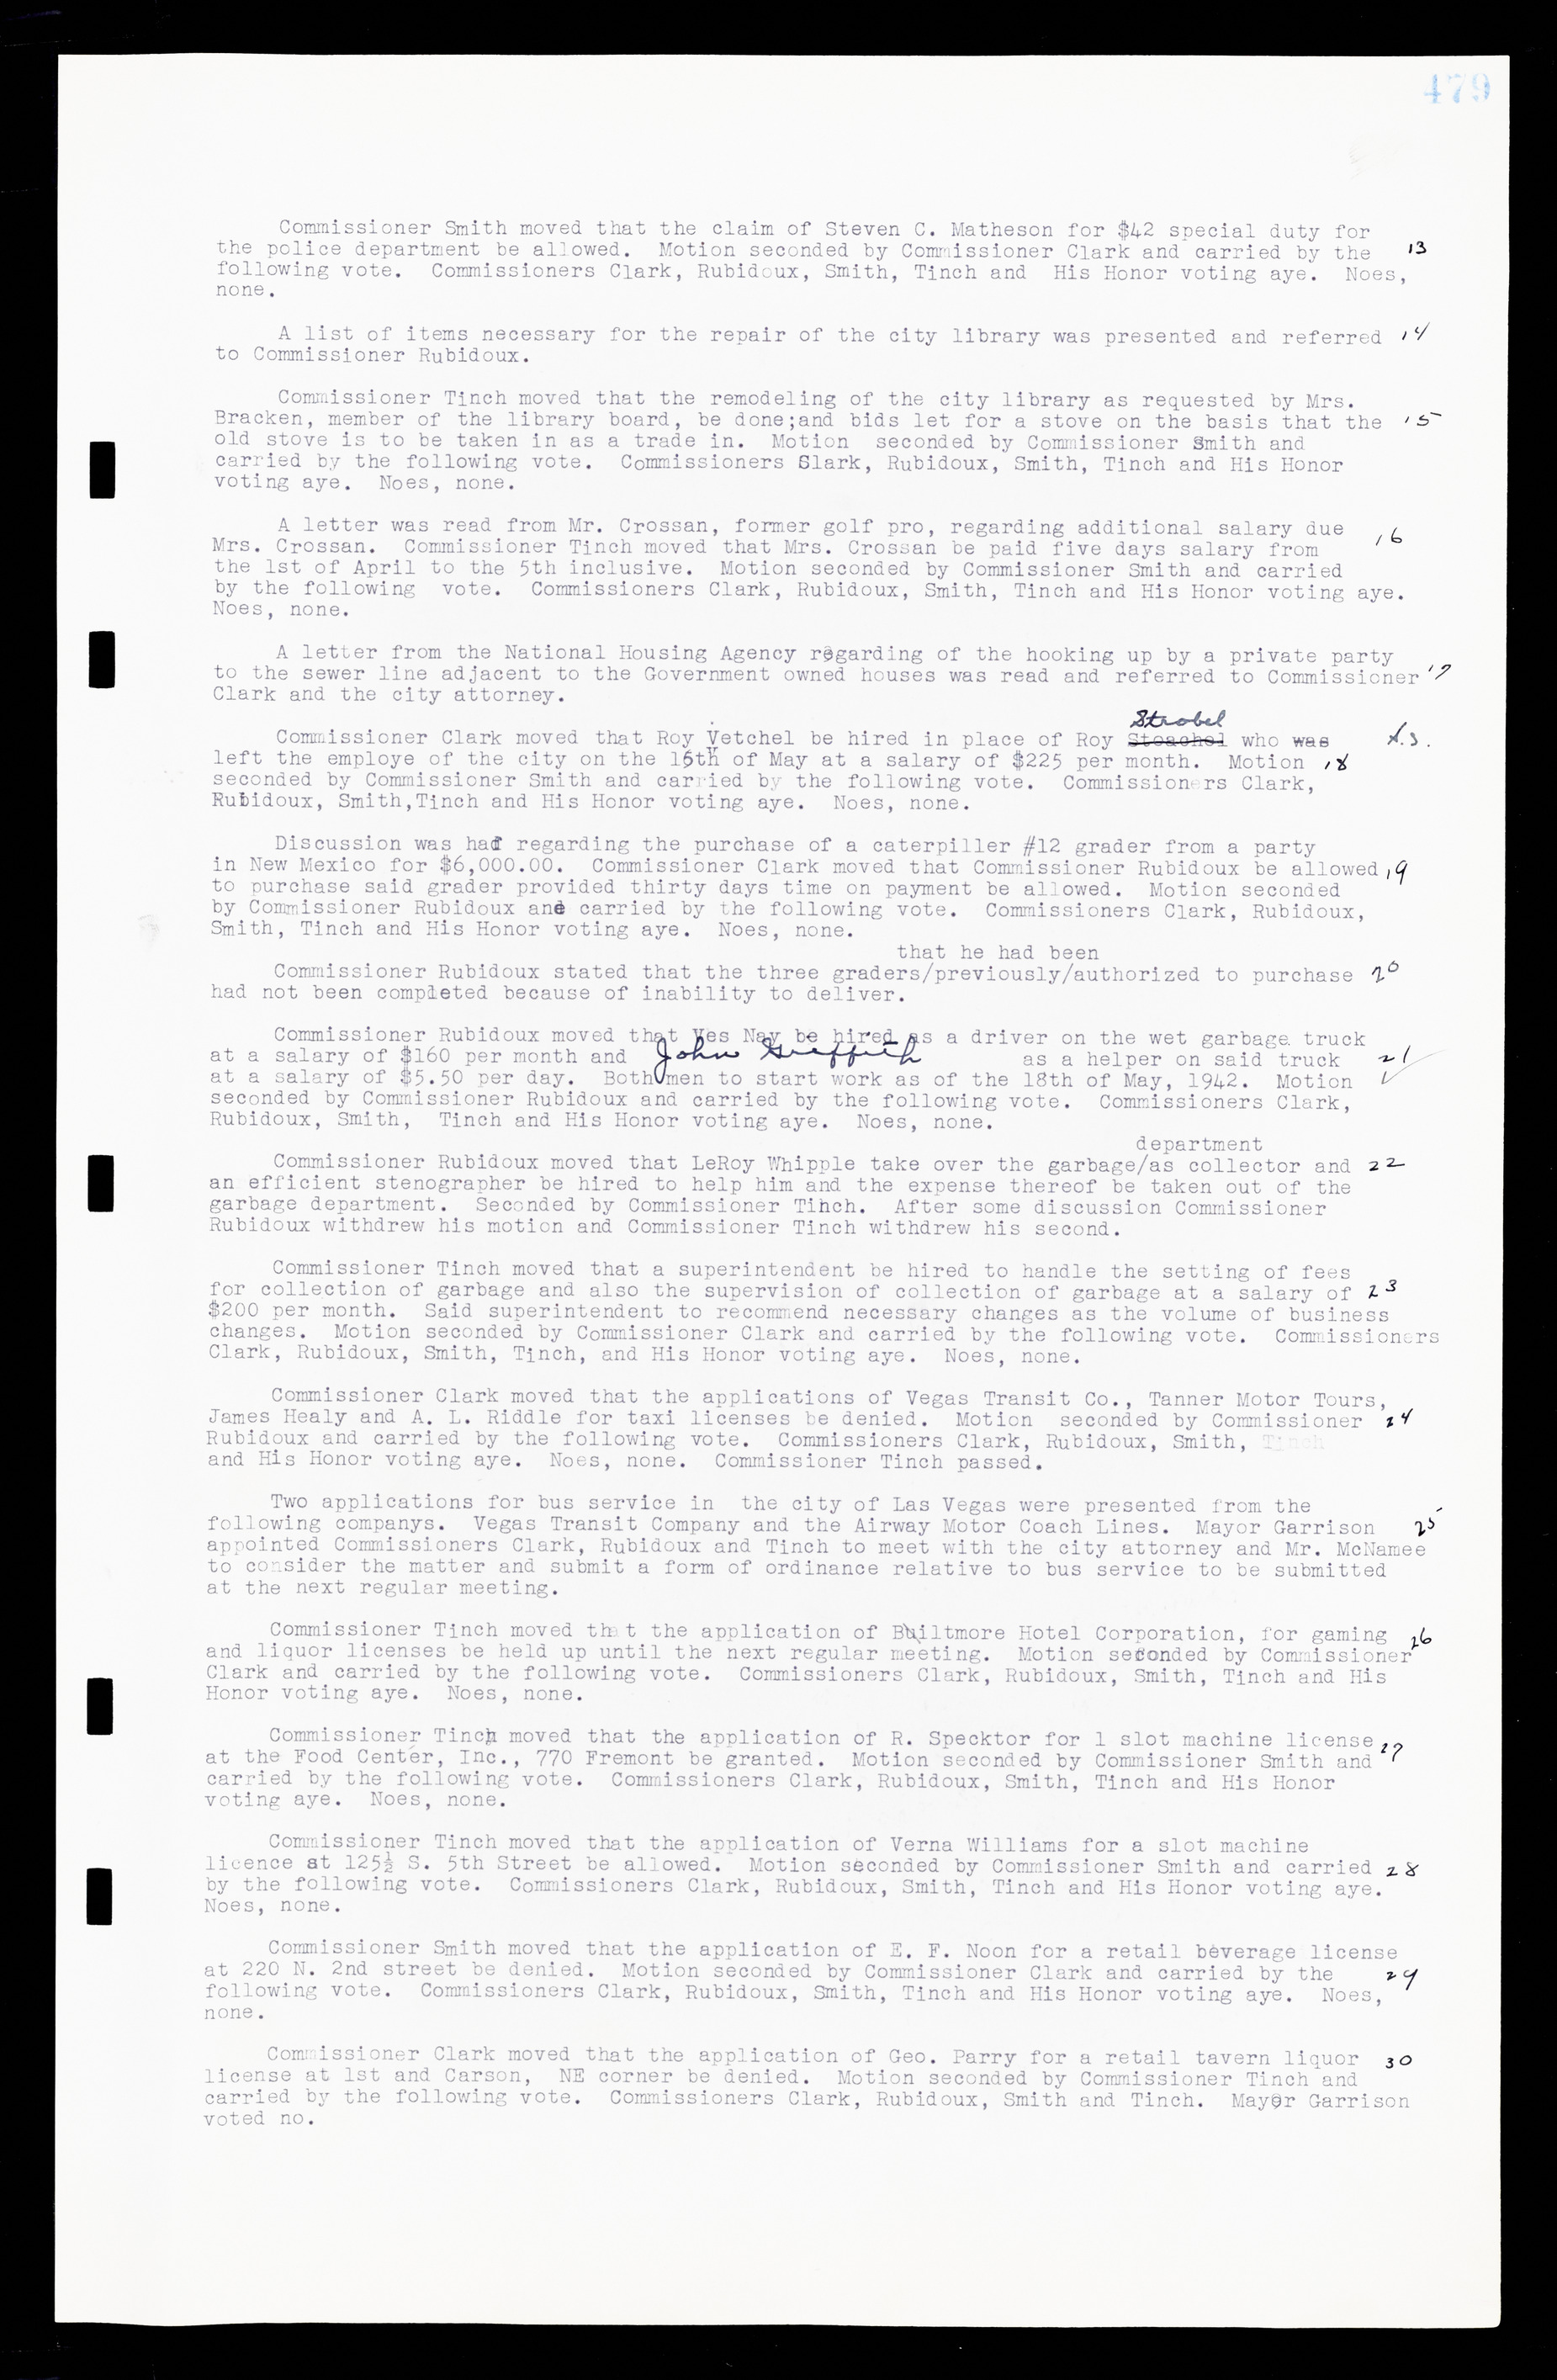 Las Vegas City Commission Minutes, February 17, 1937 to August 4, 1942, lvc000004-507